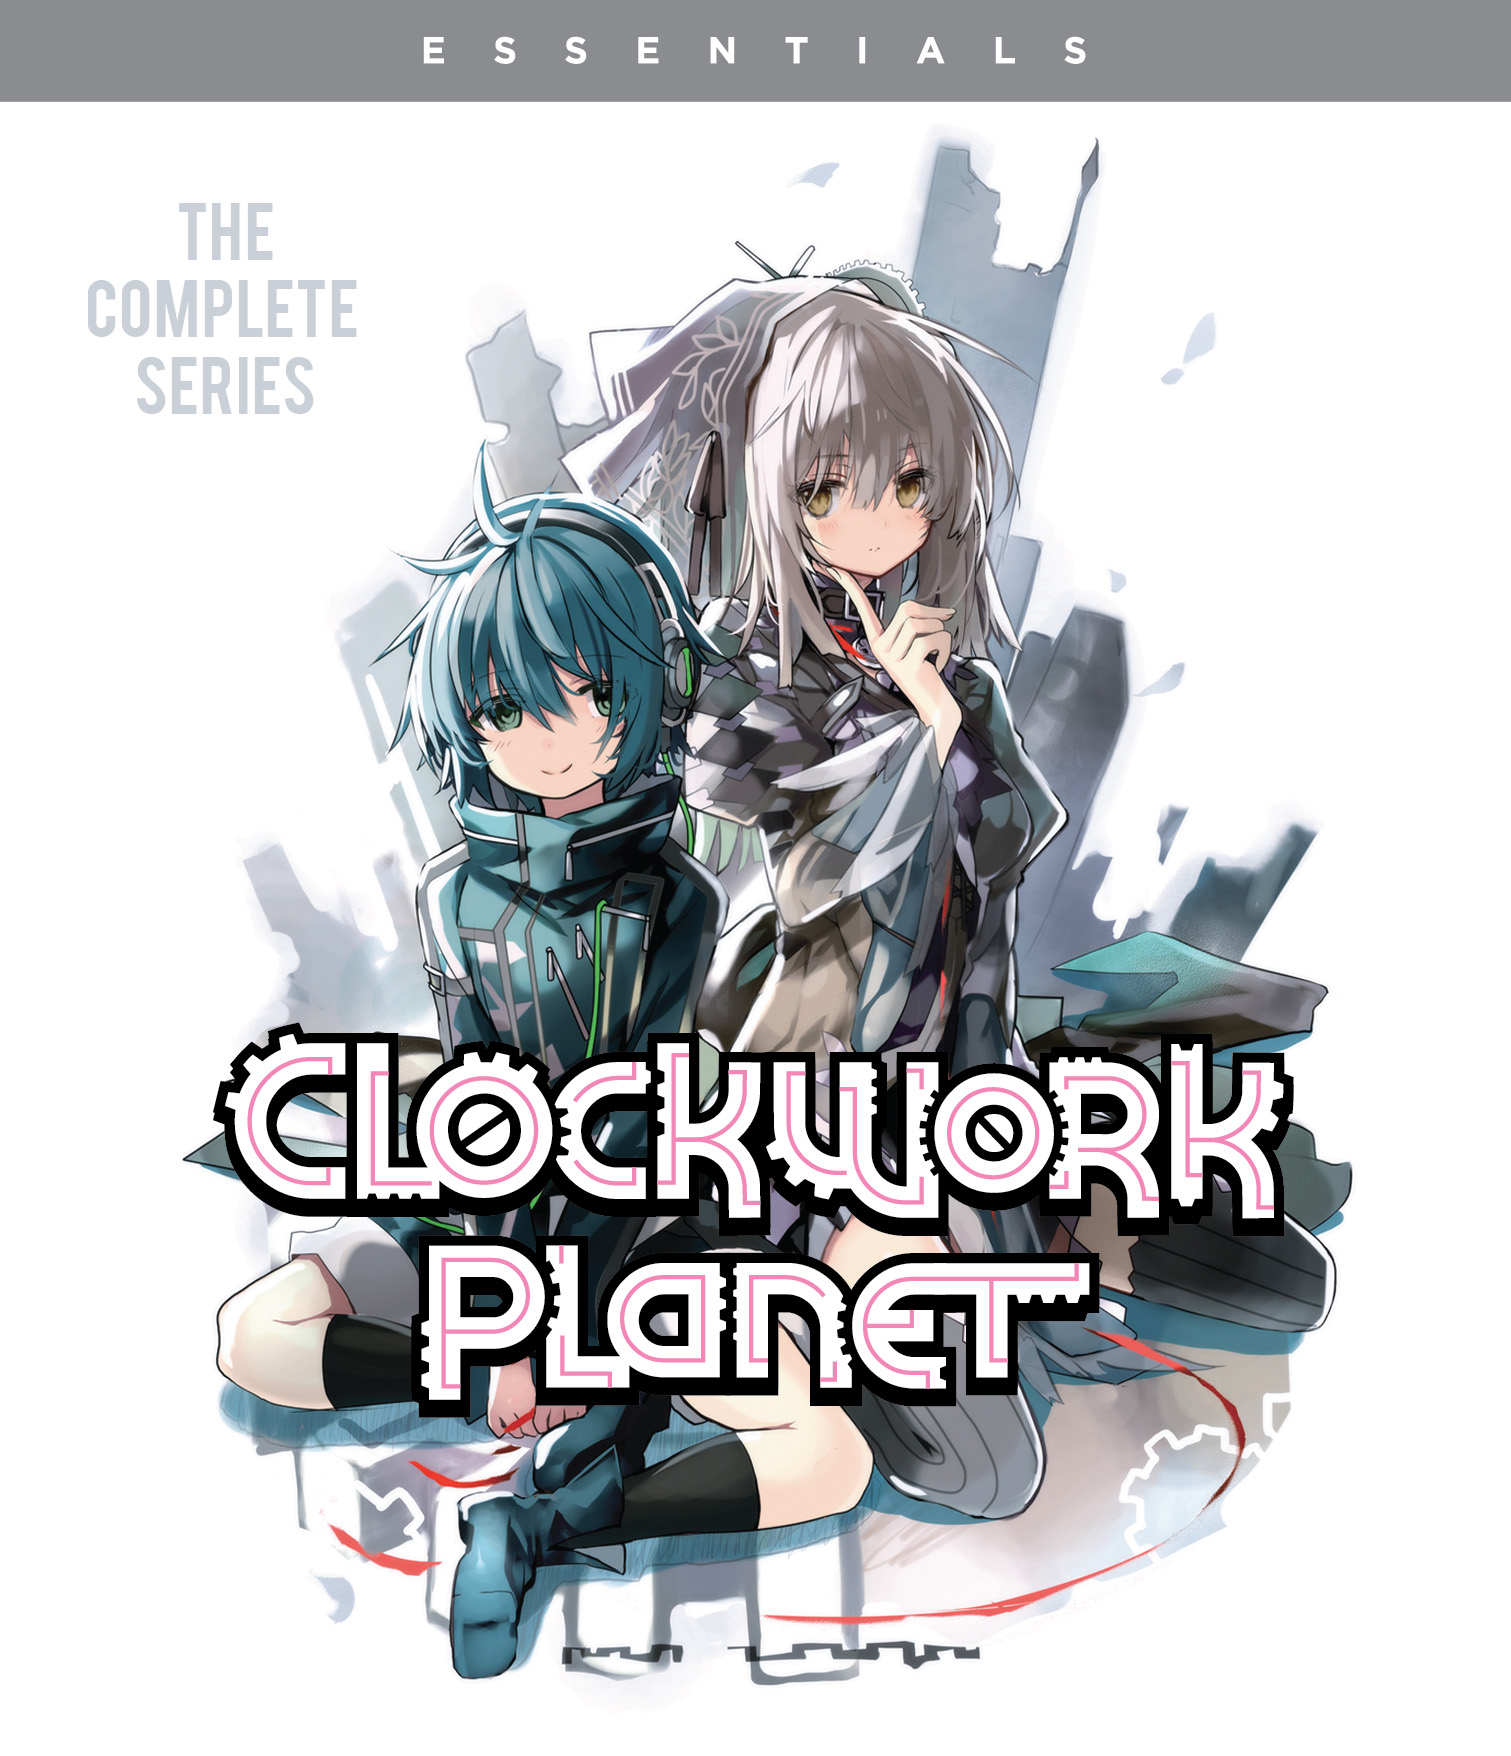 Clockwork Planet - Pictures 